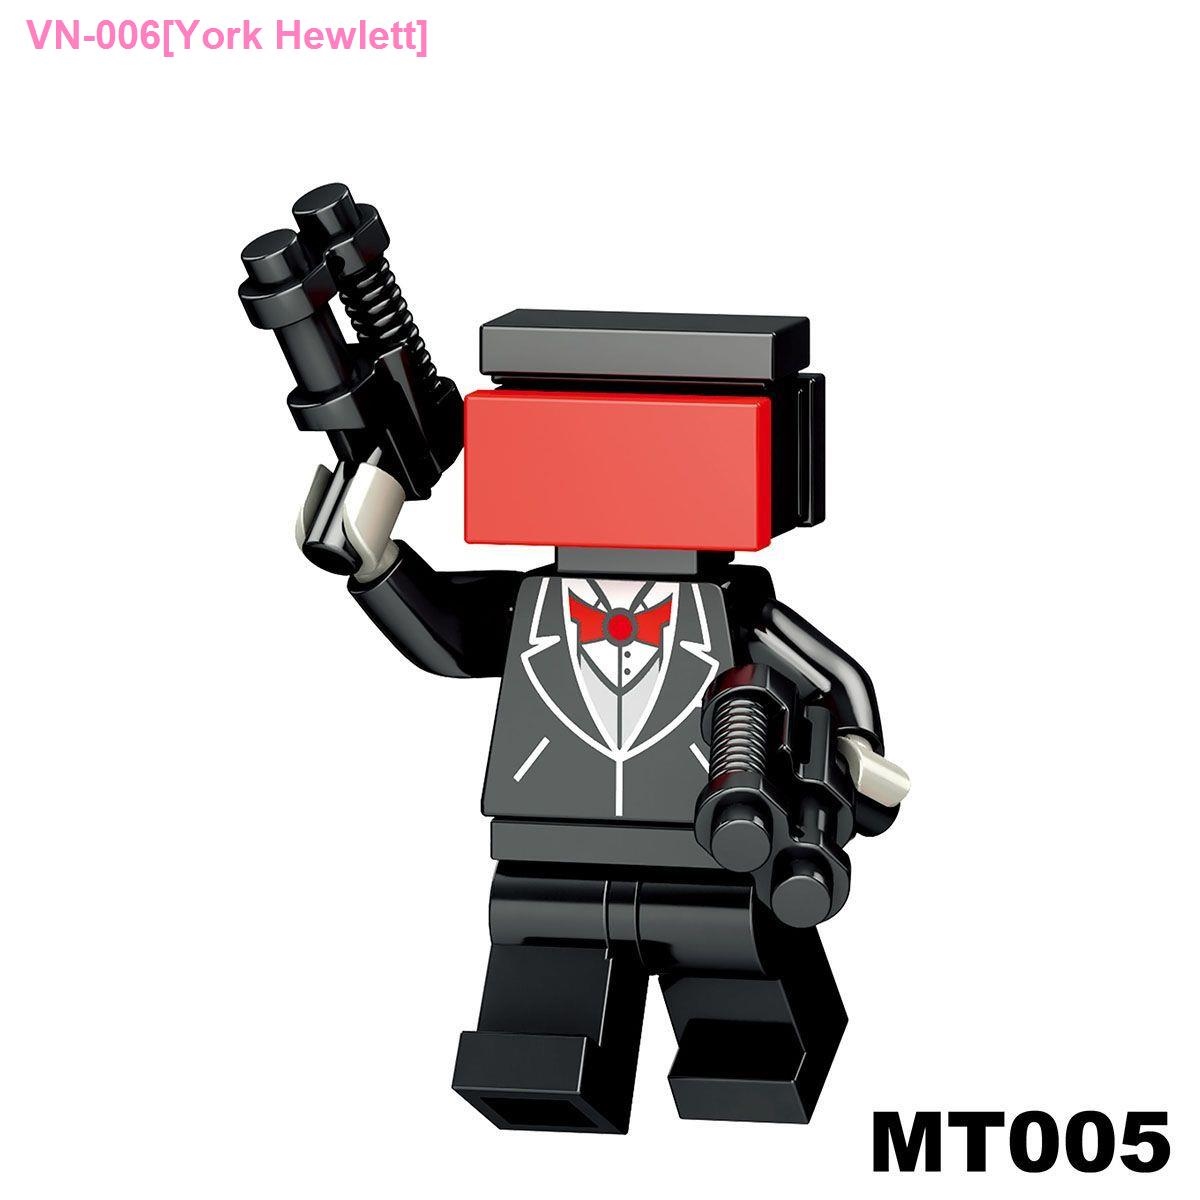 ◇ Compatible with Lego Toilet Man KDI818 Super Titan TV Speaker Man MT1000 building block toys LG1009